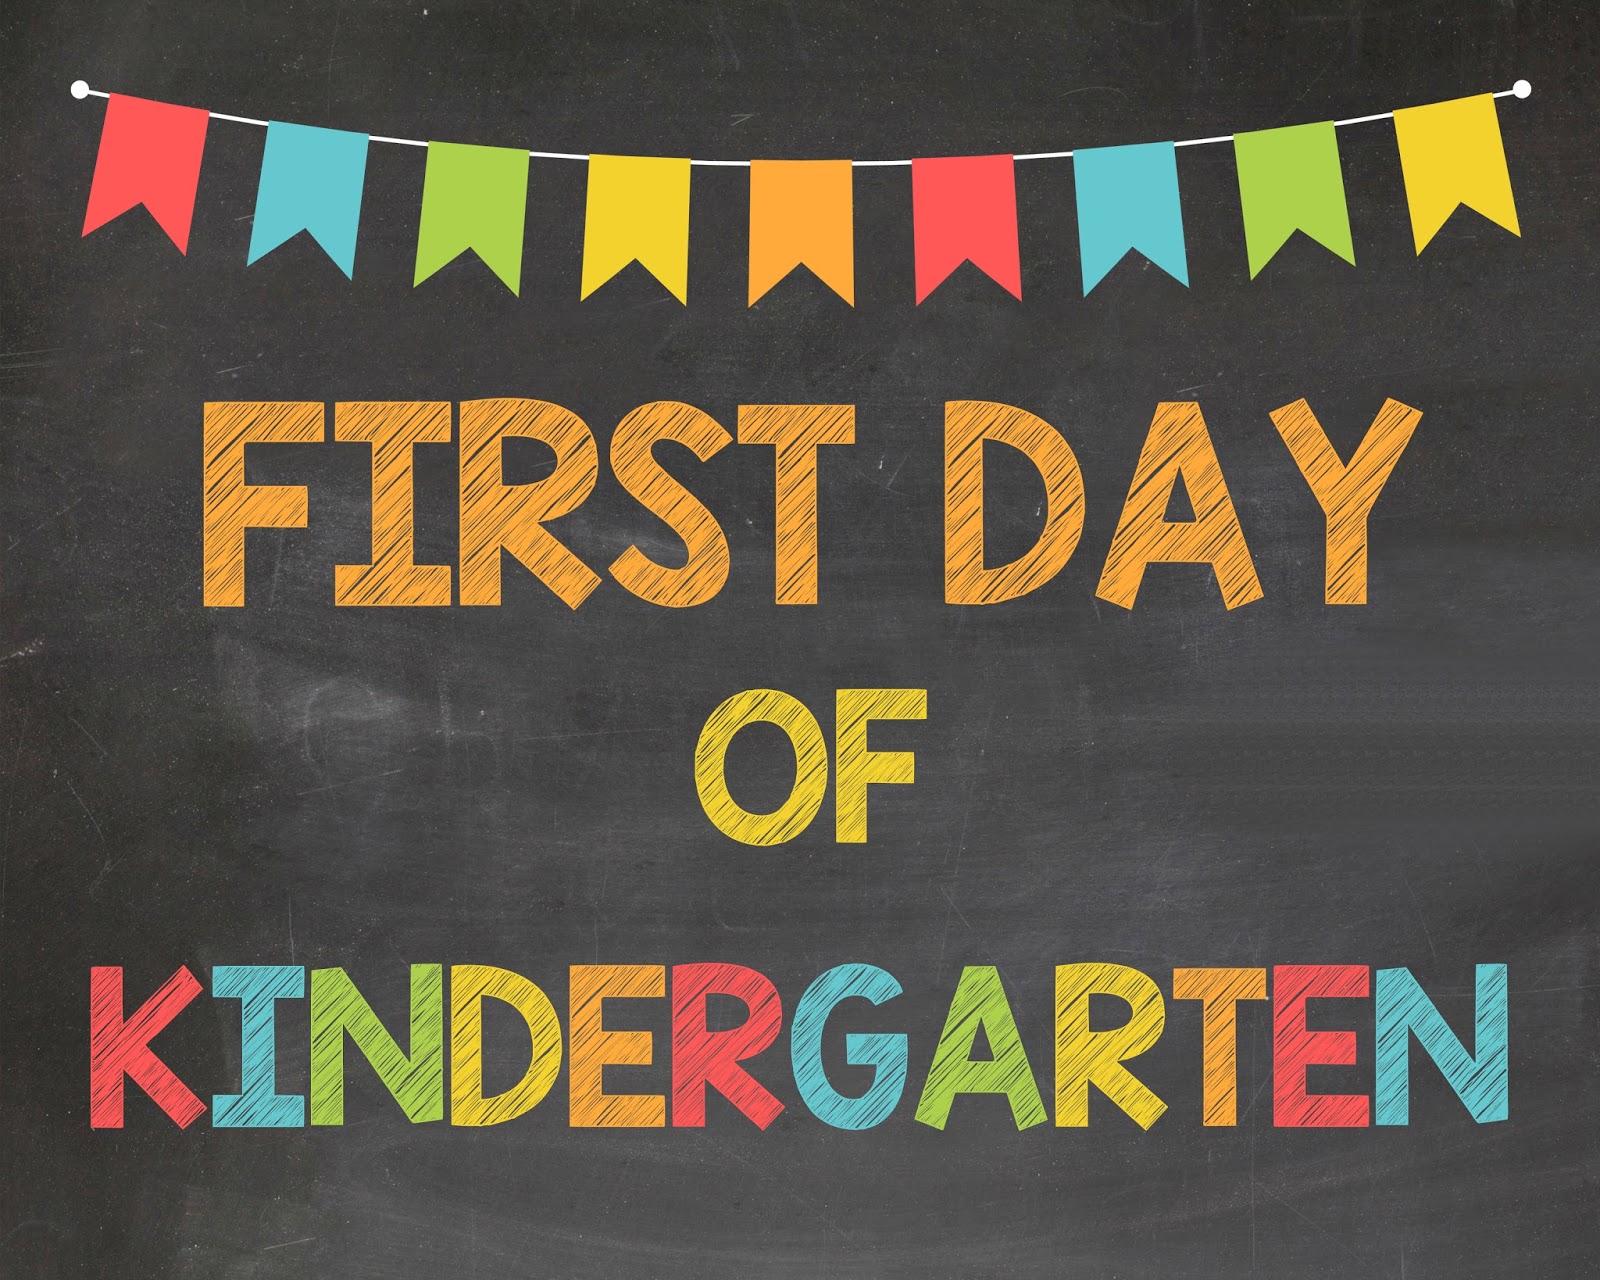 first day of kindergarten 2021 sign